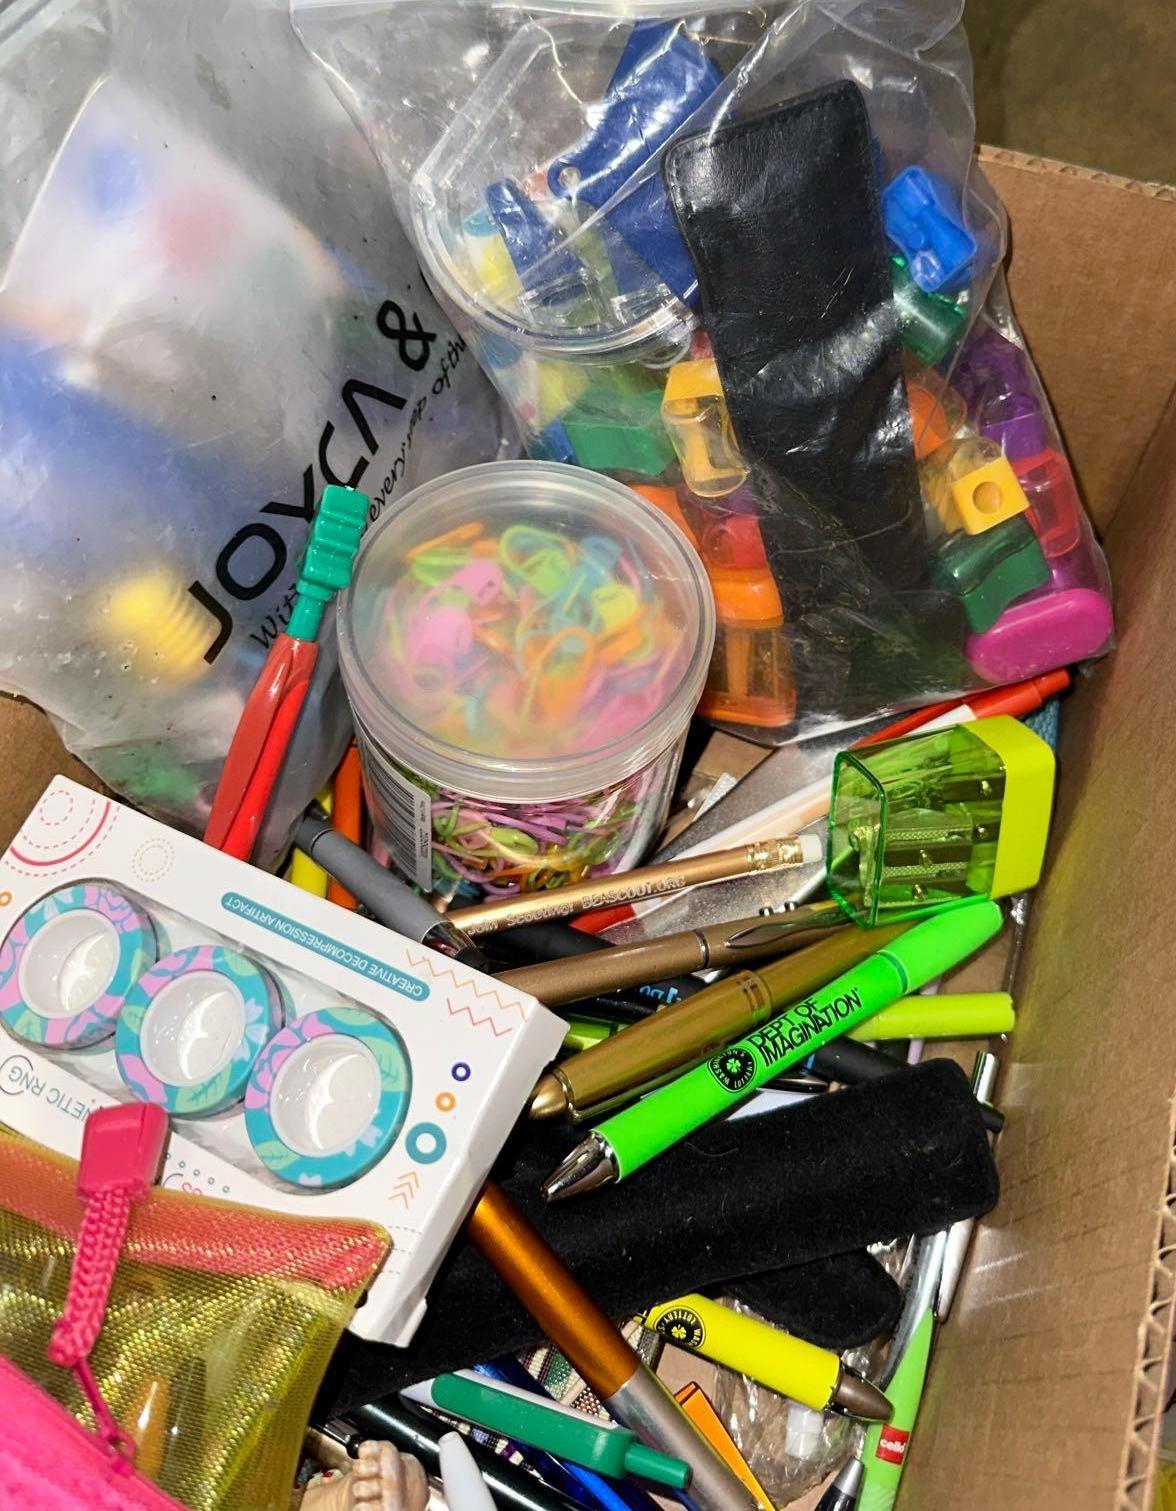 Office/ School Supplies/ Coloring supplies